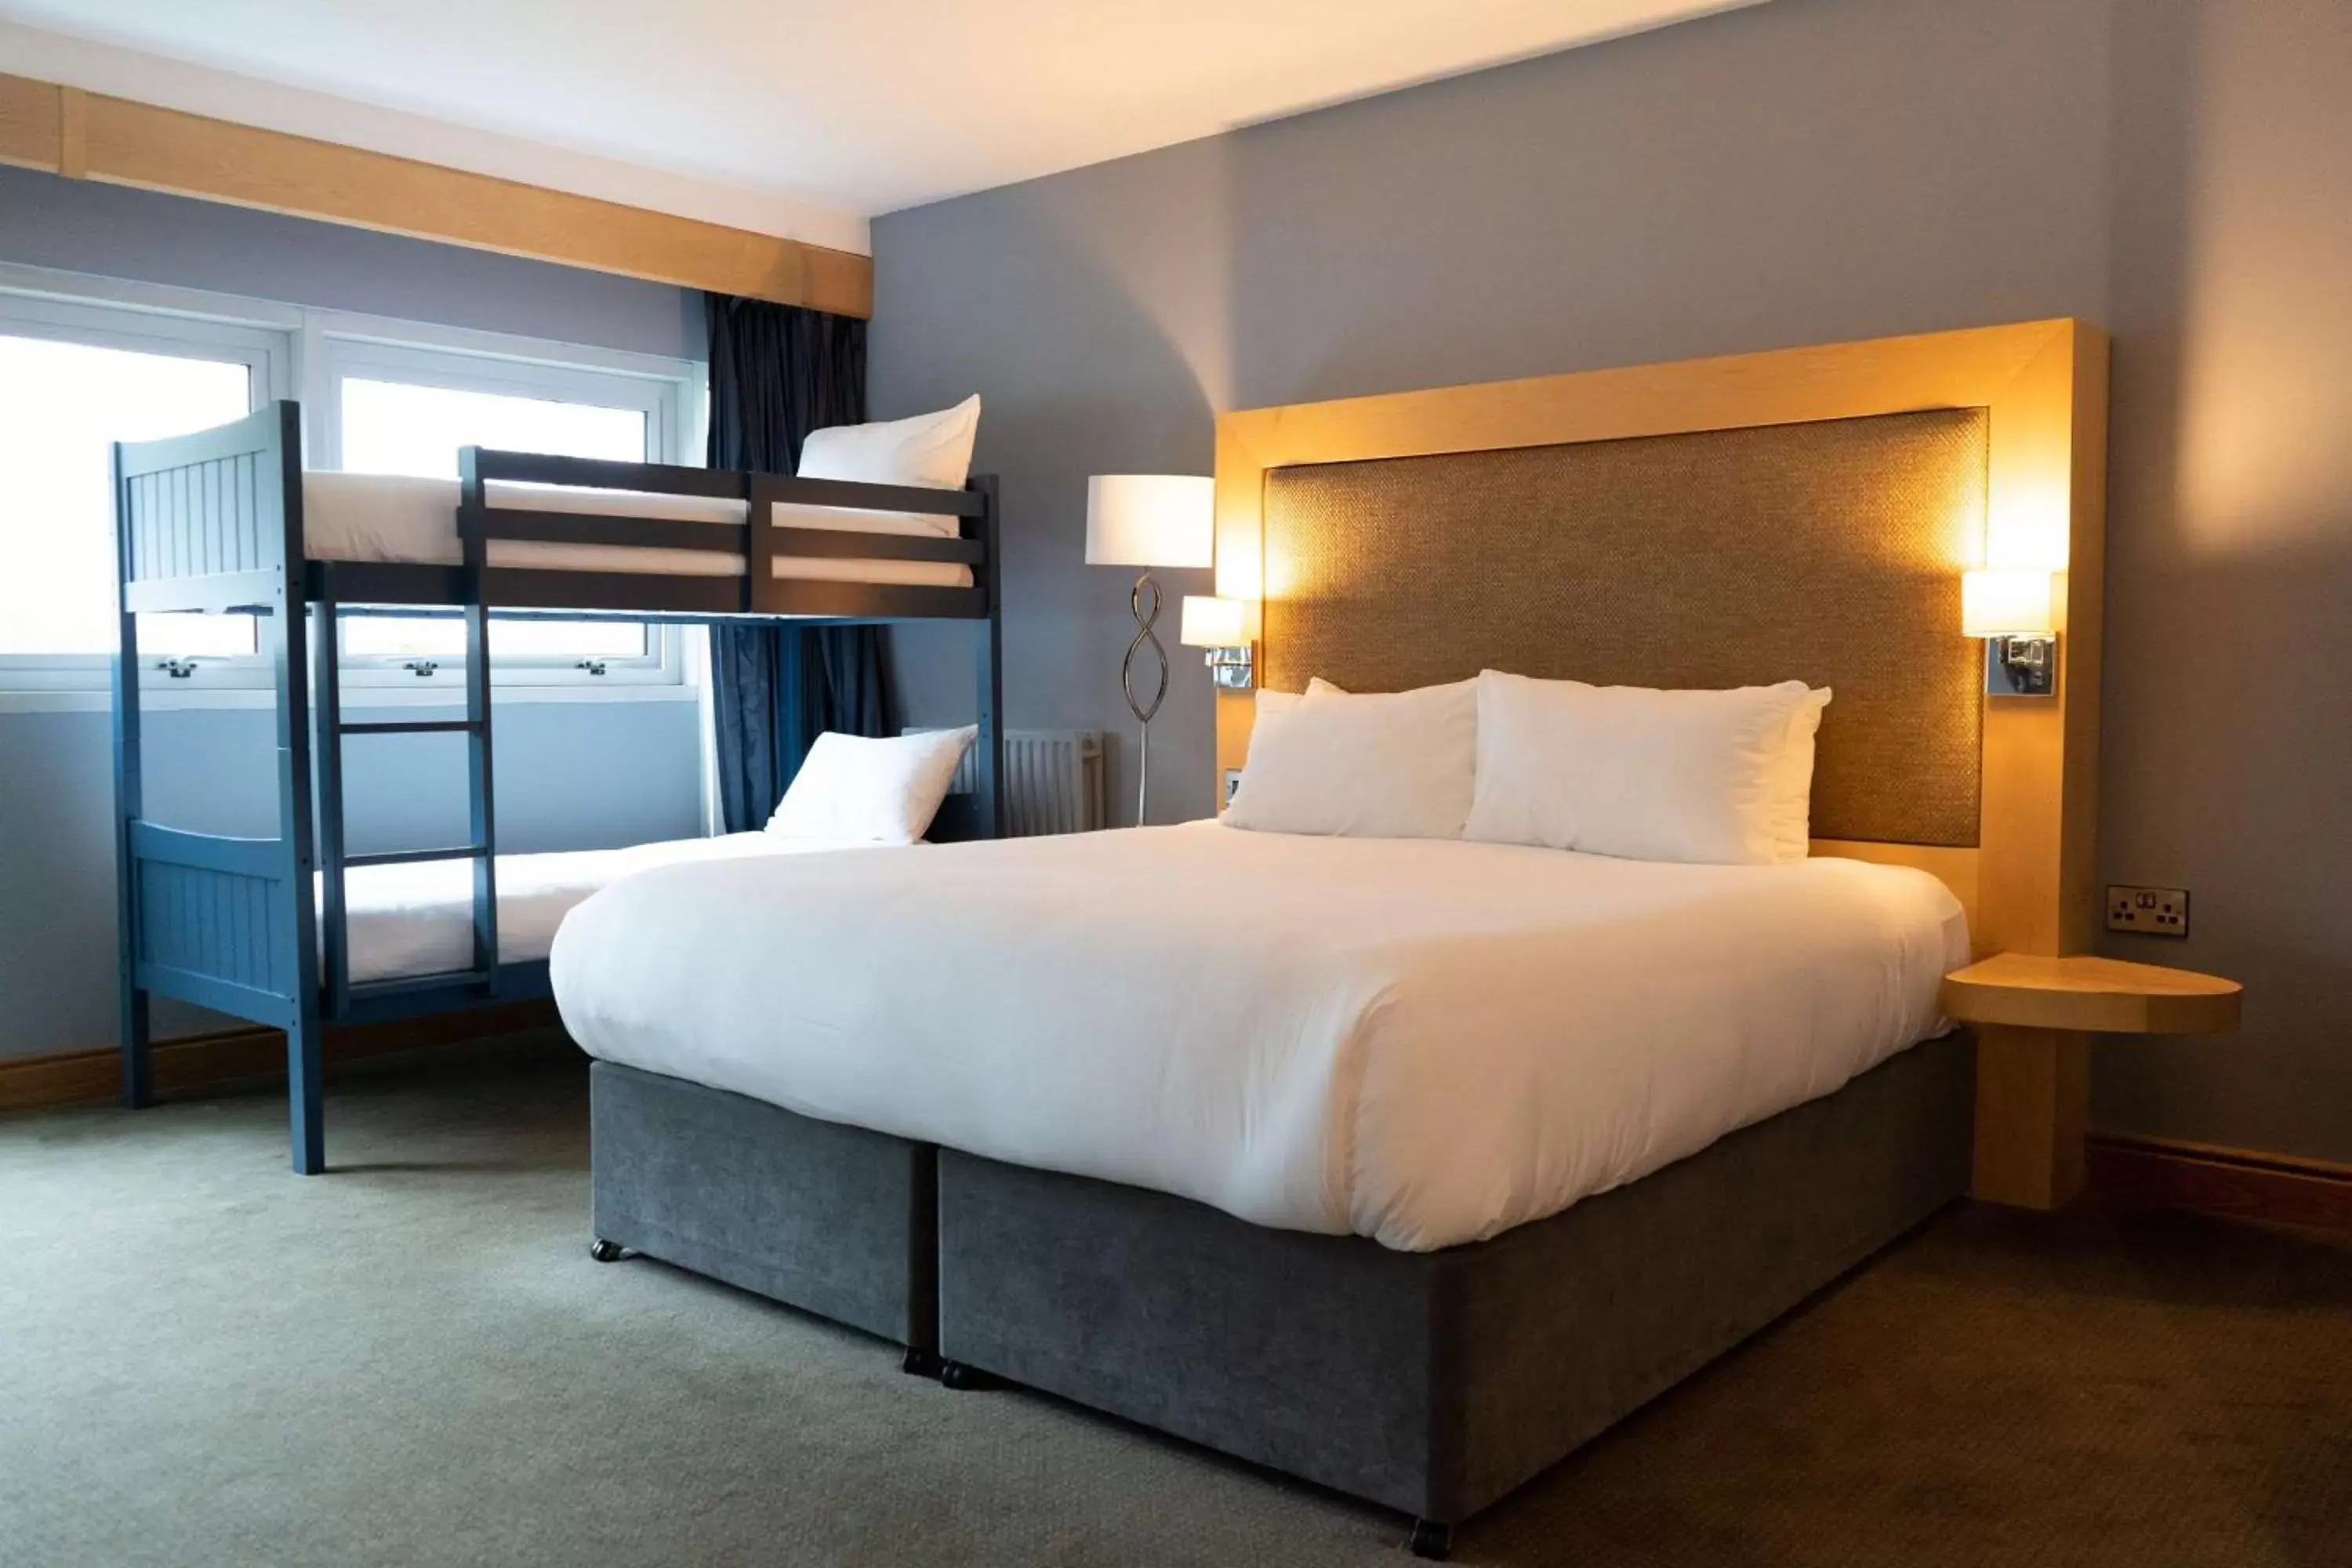 Bedroom, Bed in Radisson BLU Hotel & Spa, Little Island Cork